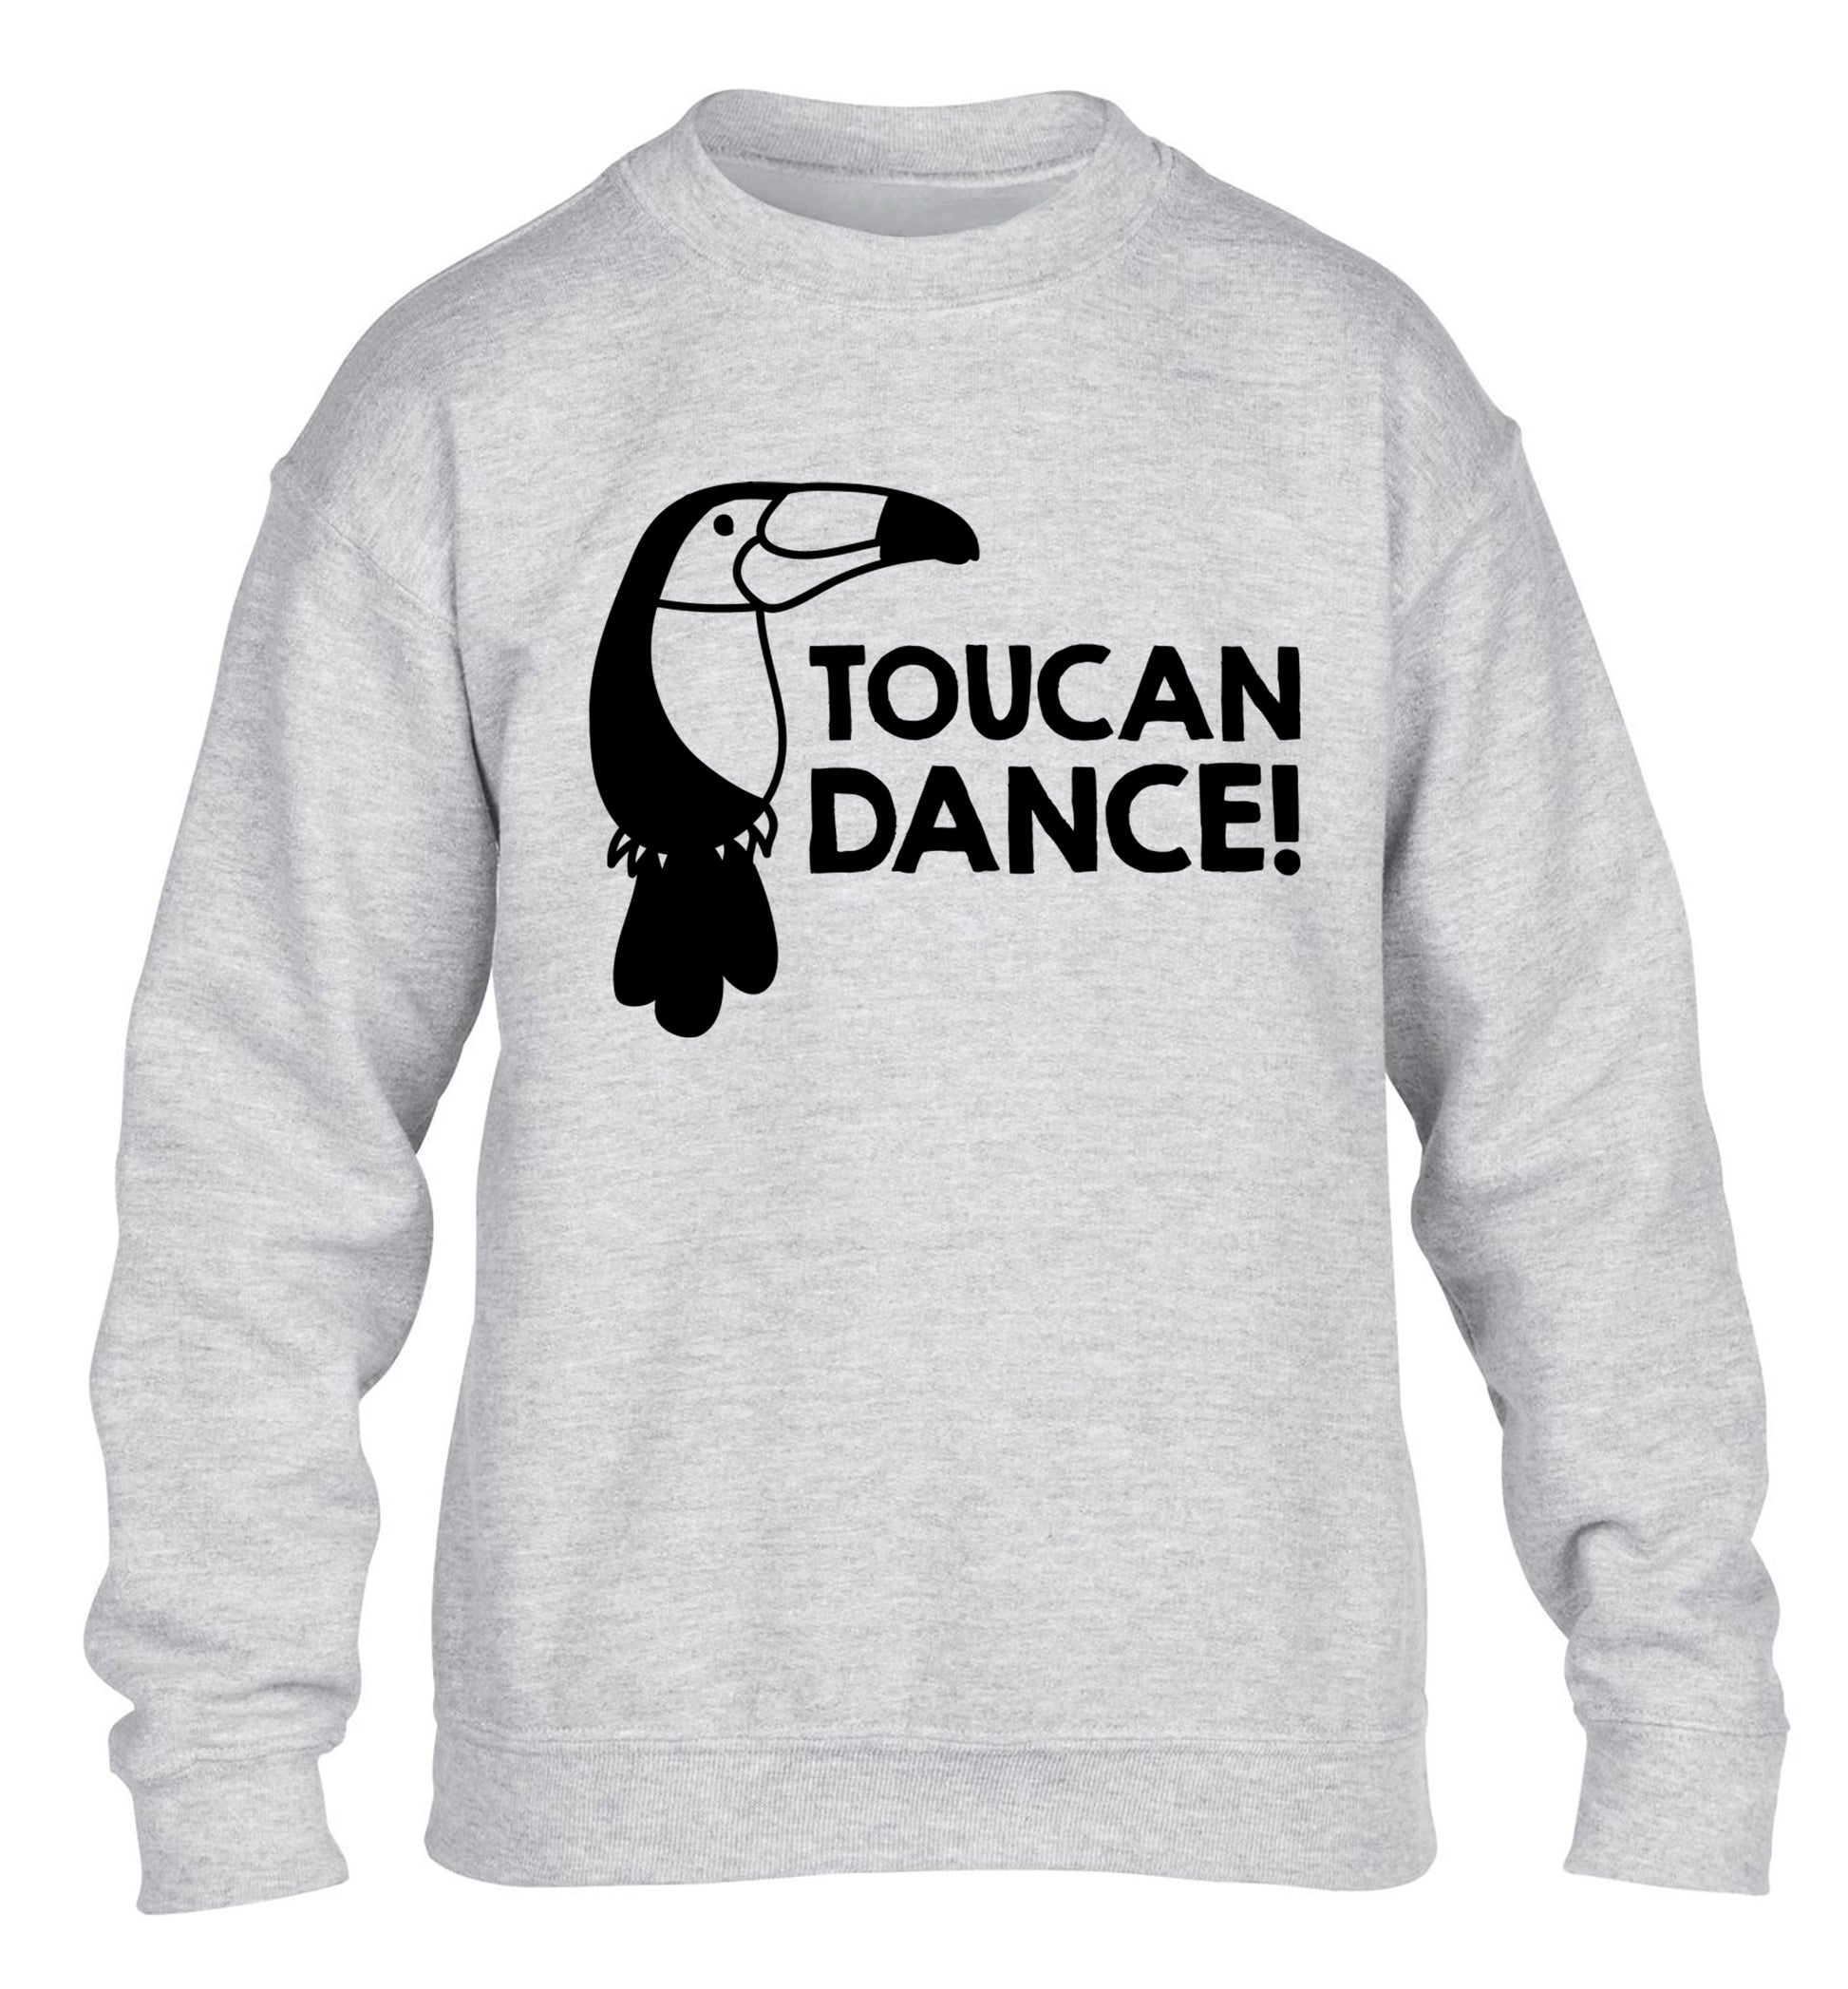 Toucan dance children's grey sweater 12-13 Years